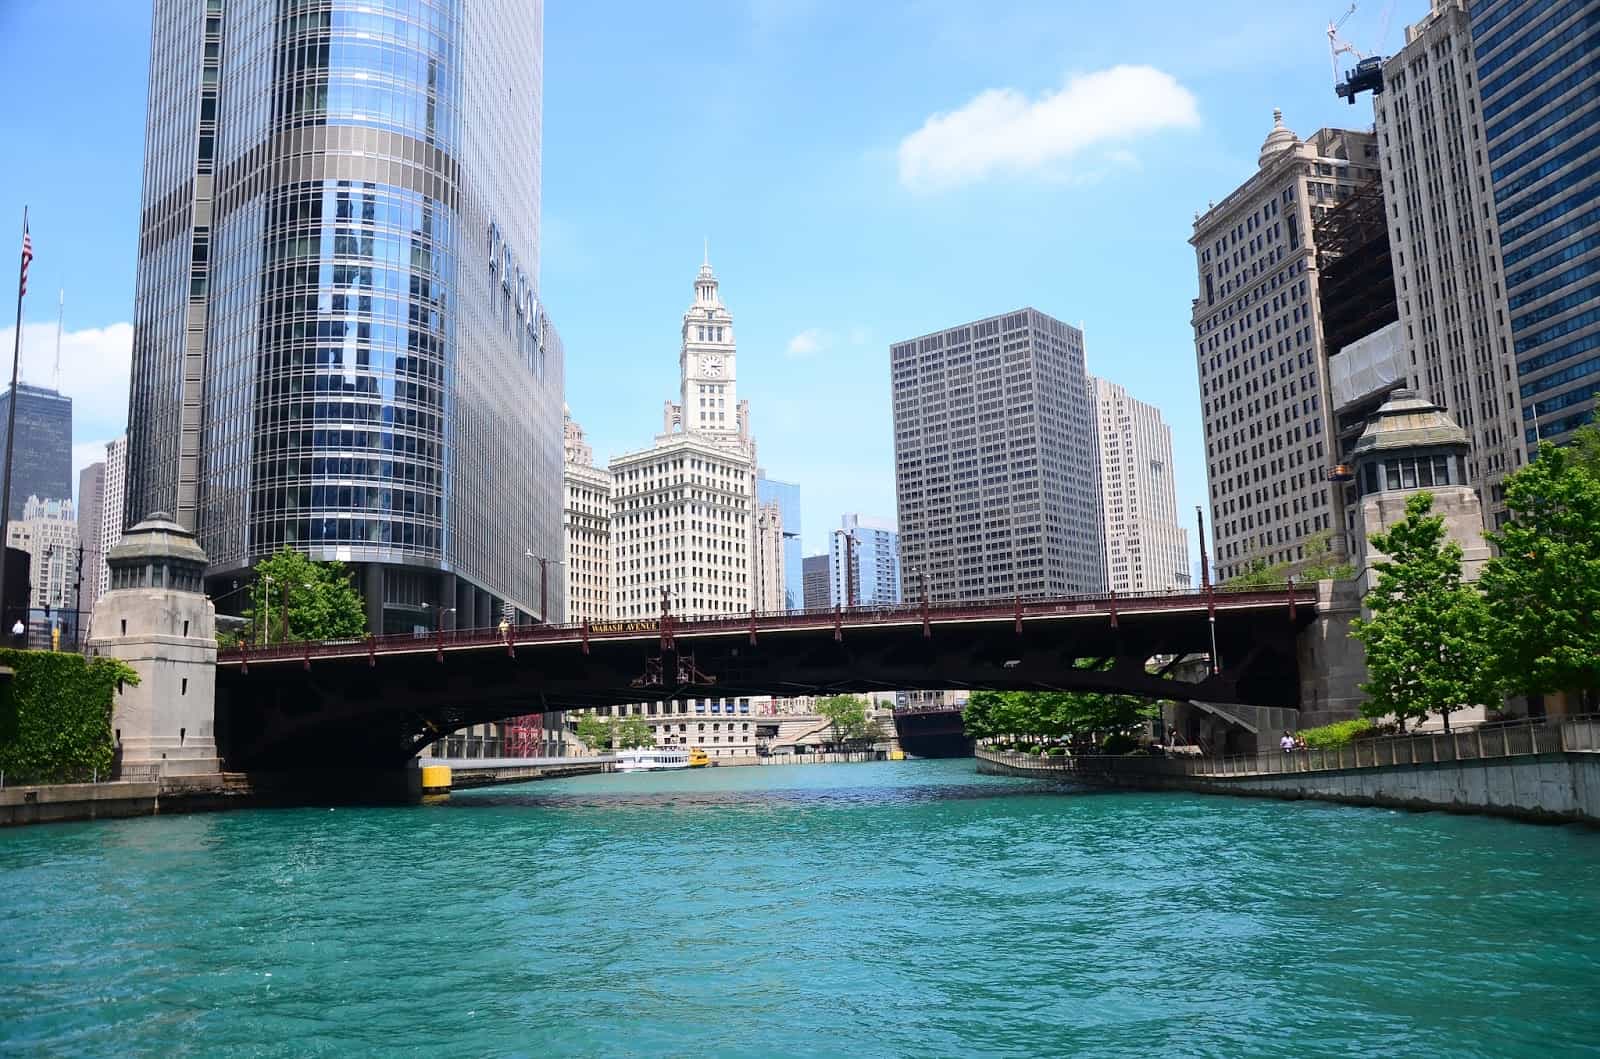 Wabash Avenue Bridge over the Chicago River